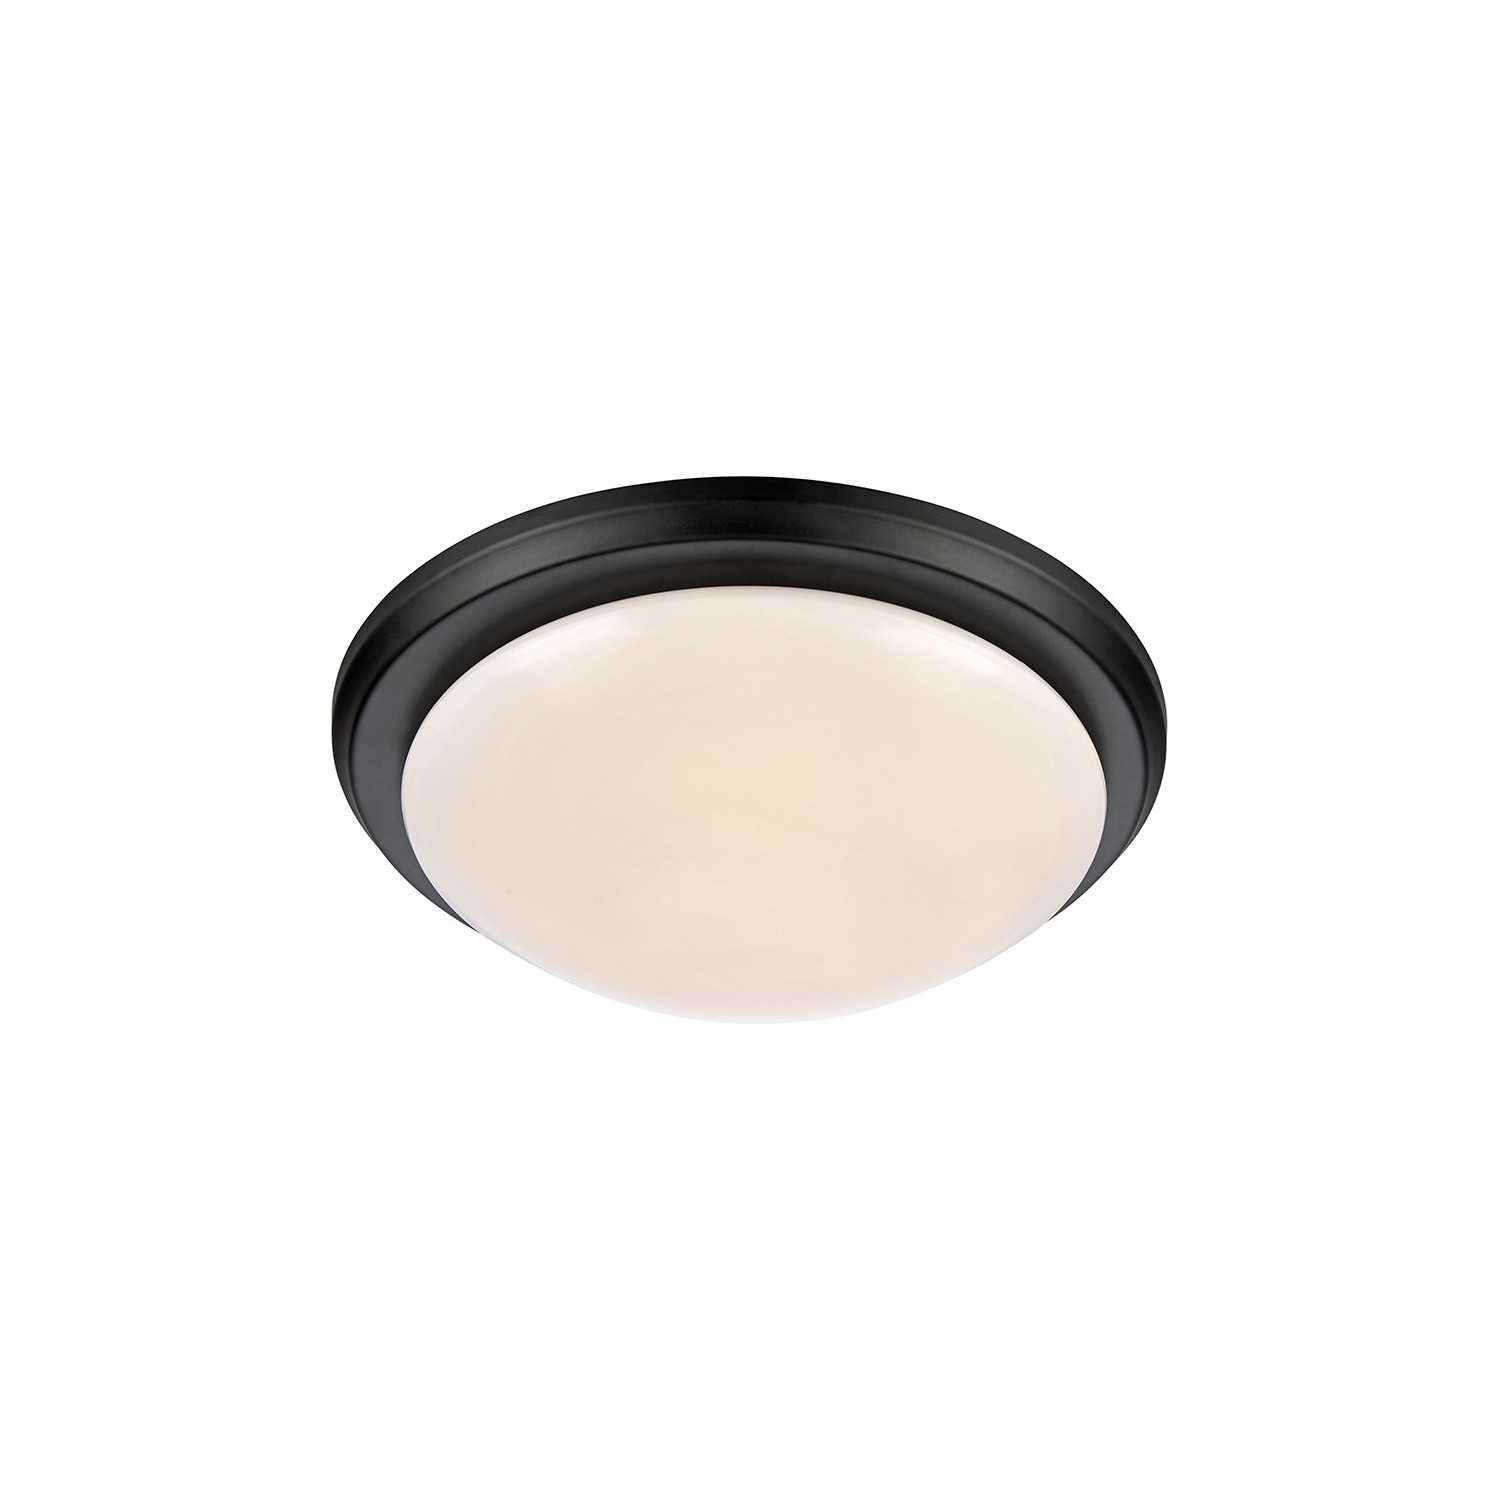 ROTOR Plafon LED 35cm Chrom/Biały